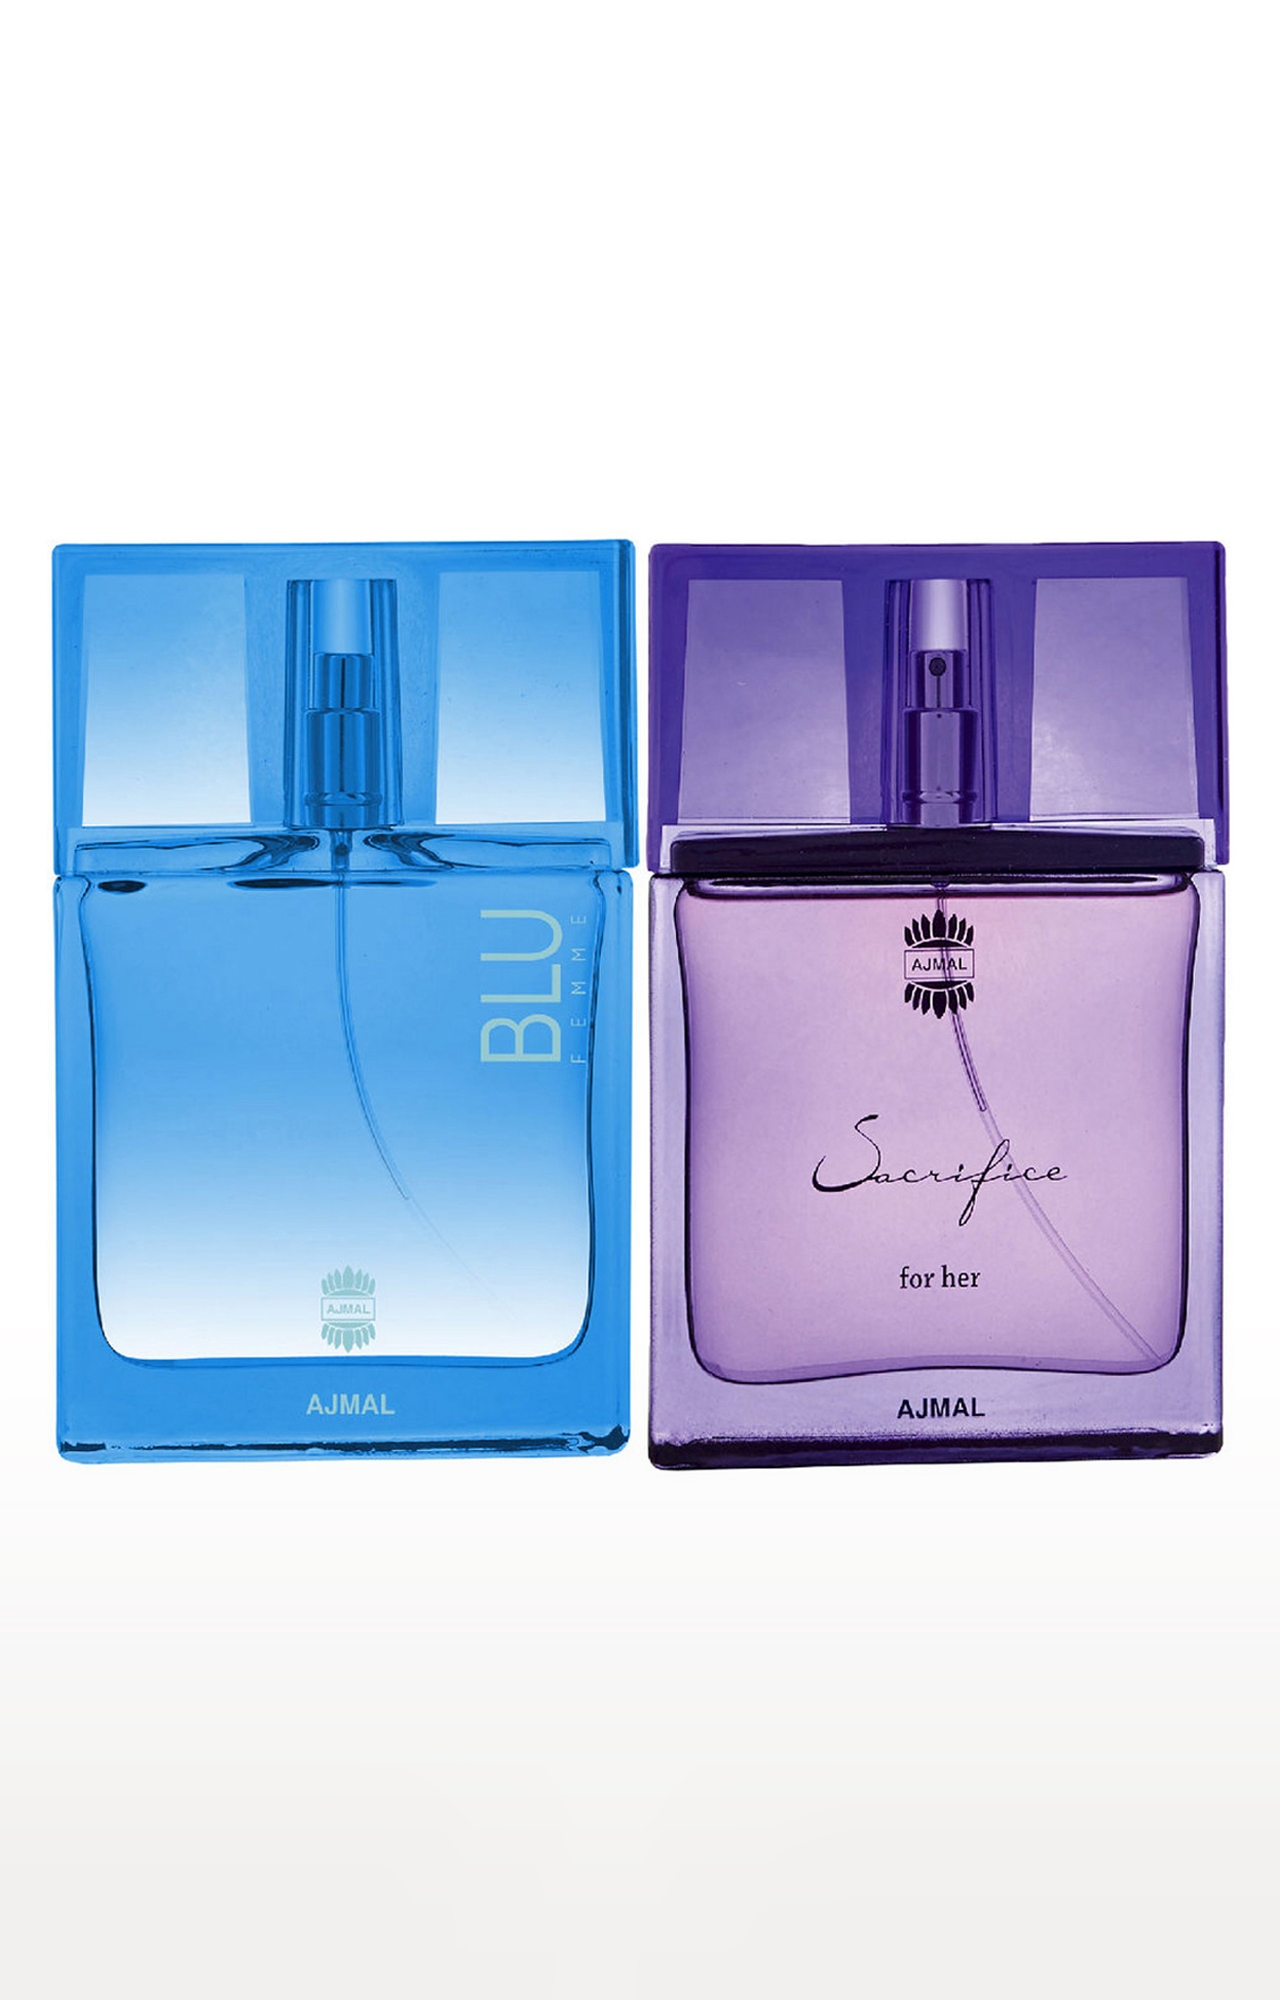 Ajmal | Ajmal Blu Femme EDP Perfume 50ml for Women and Sacrifice for HER EDP Musky Perfume 50ml for Women 0